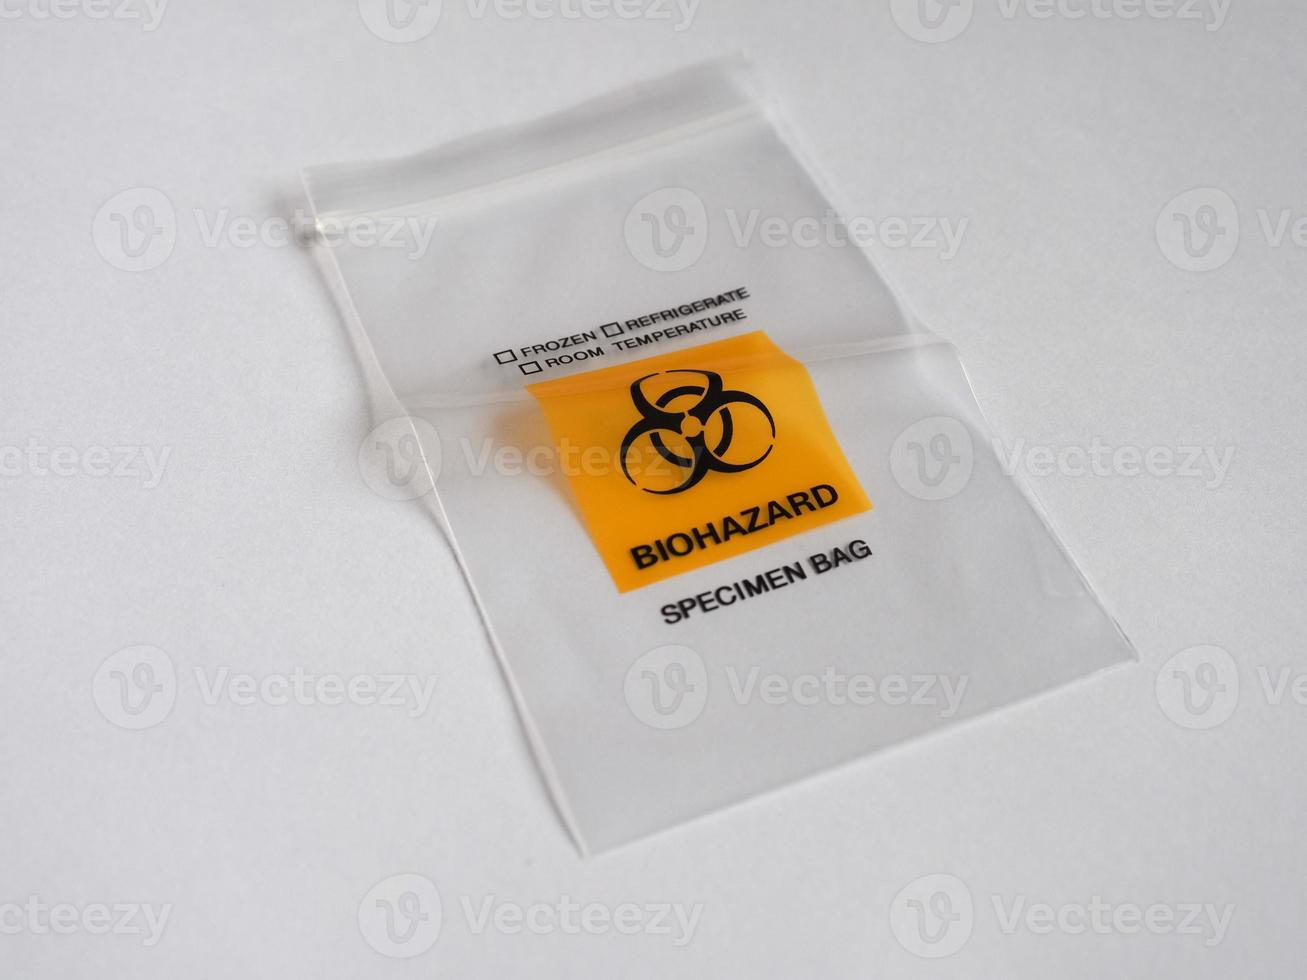 Biohazard specimen bag photo